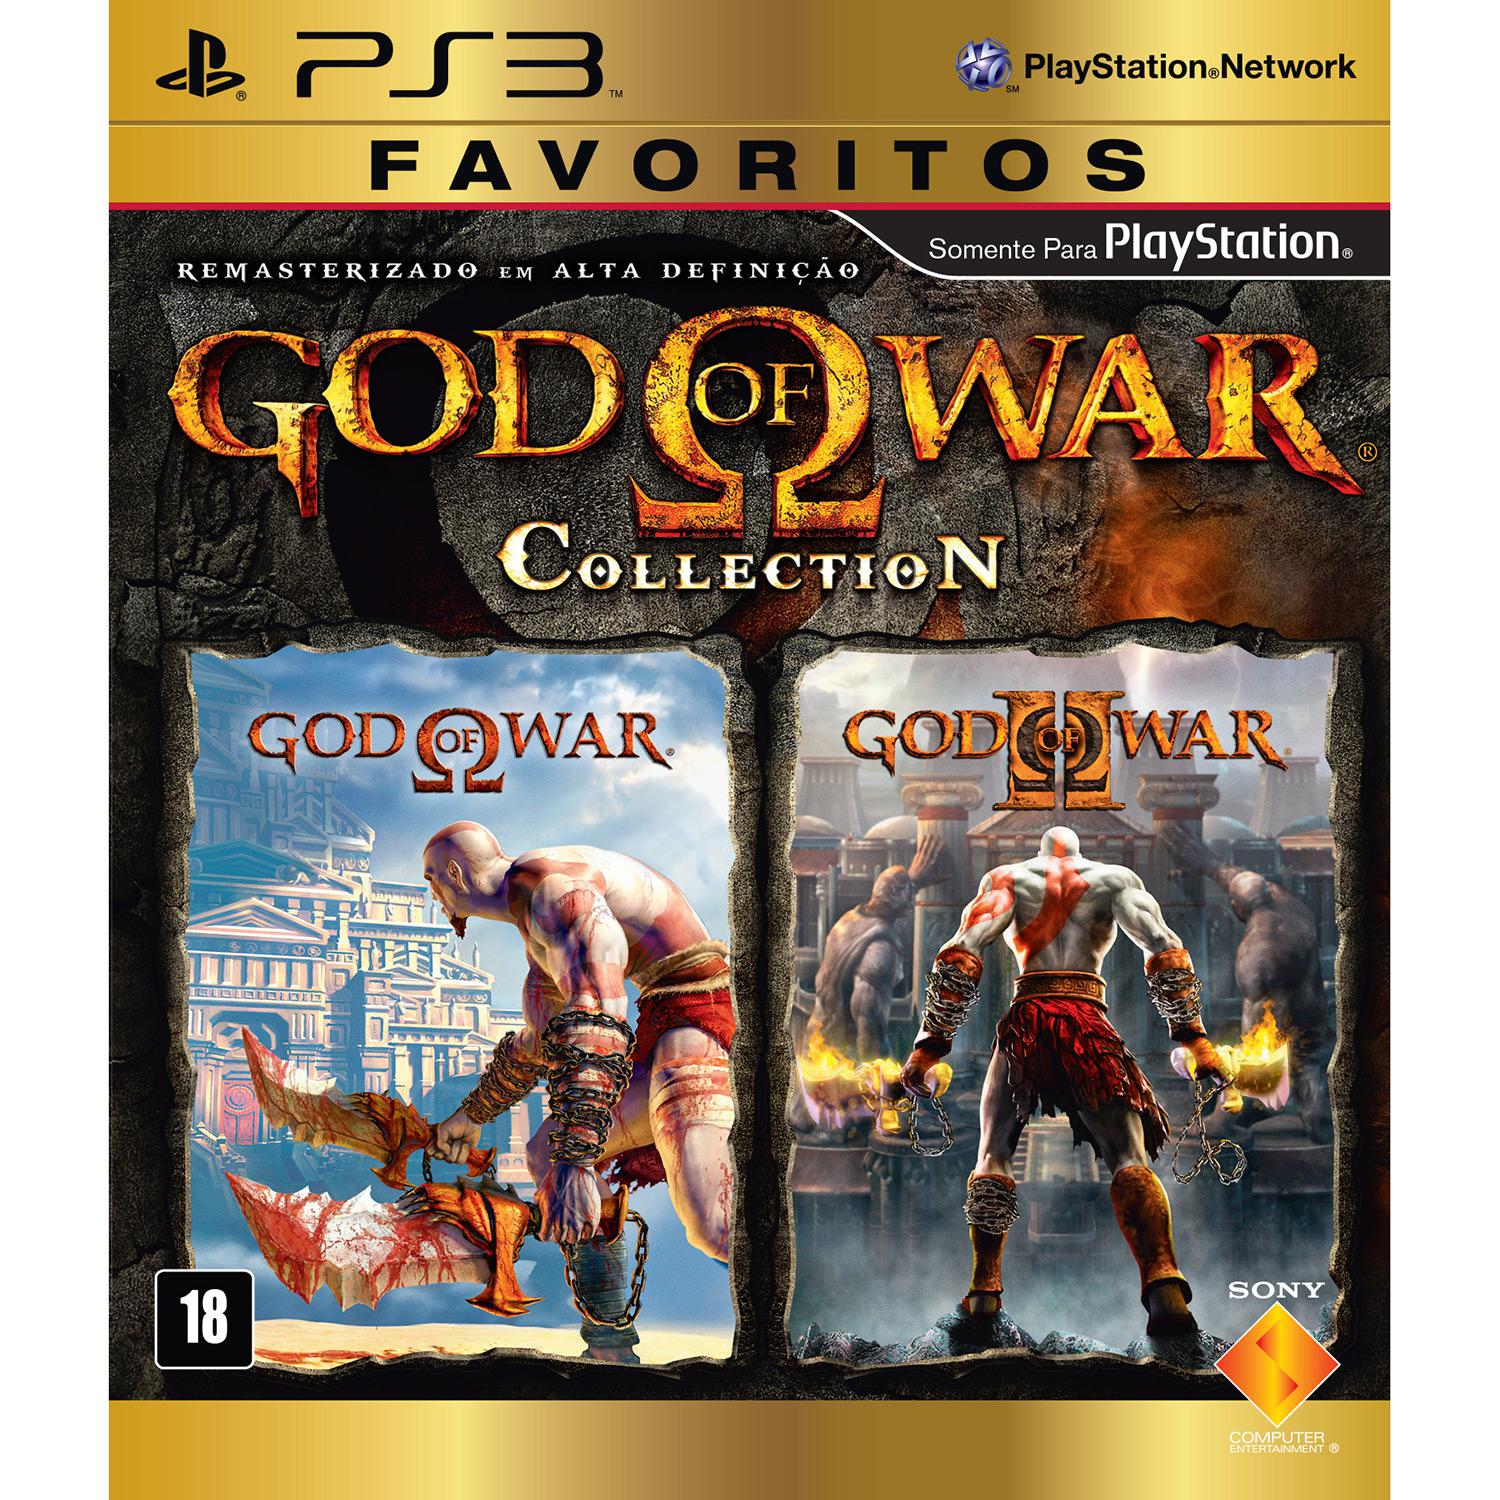 Game God Of War Collection - Favoritos - PS3 é bom? Vale a pena?